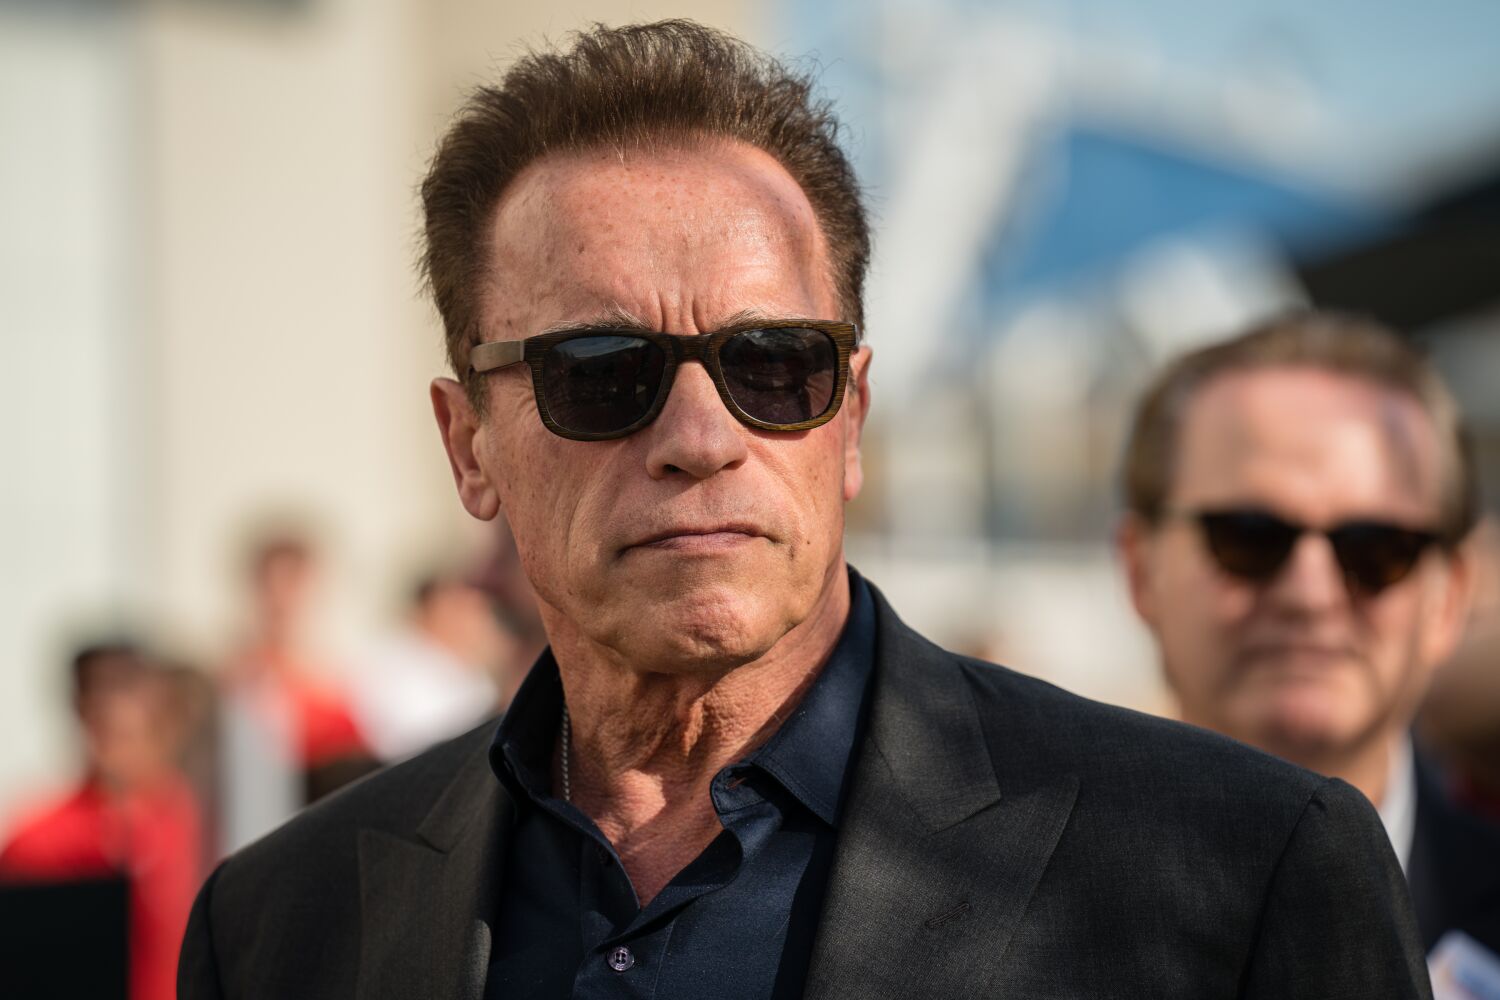 Business News: Arnold Schwarzenegger, bicyclist collide in Brentwood traffic